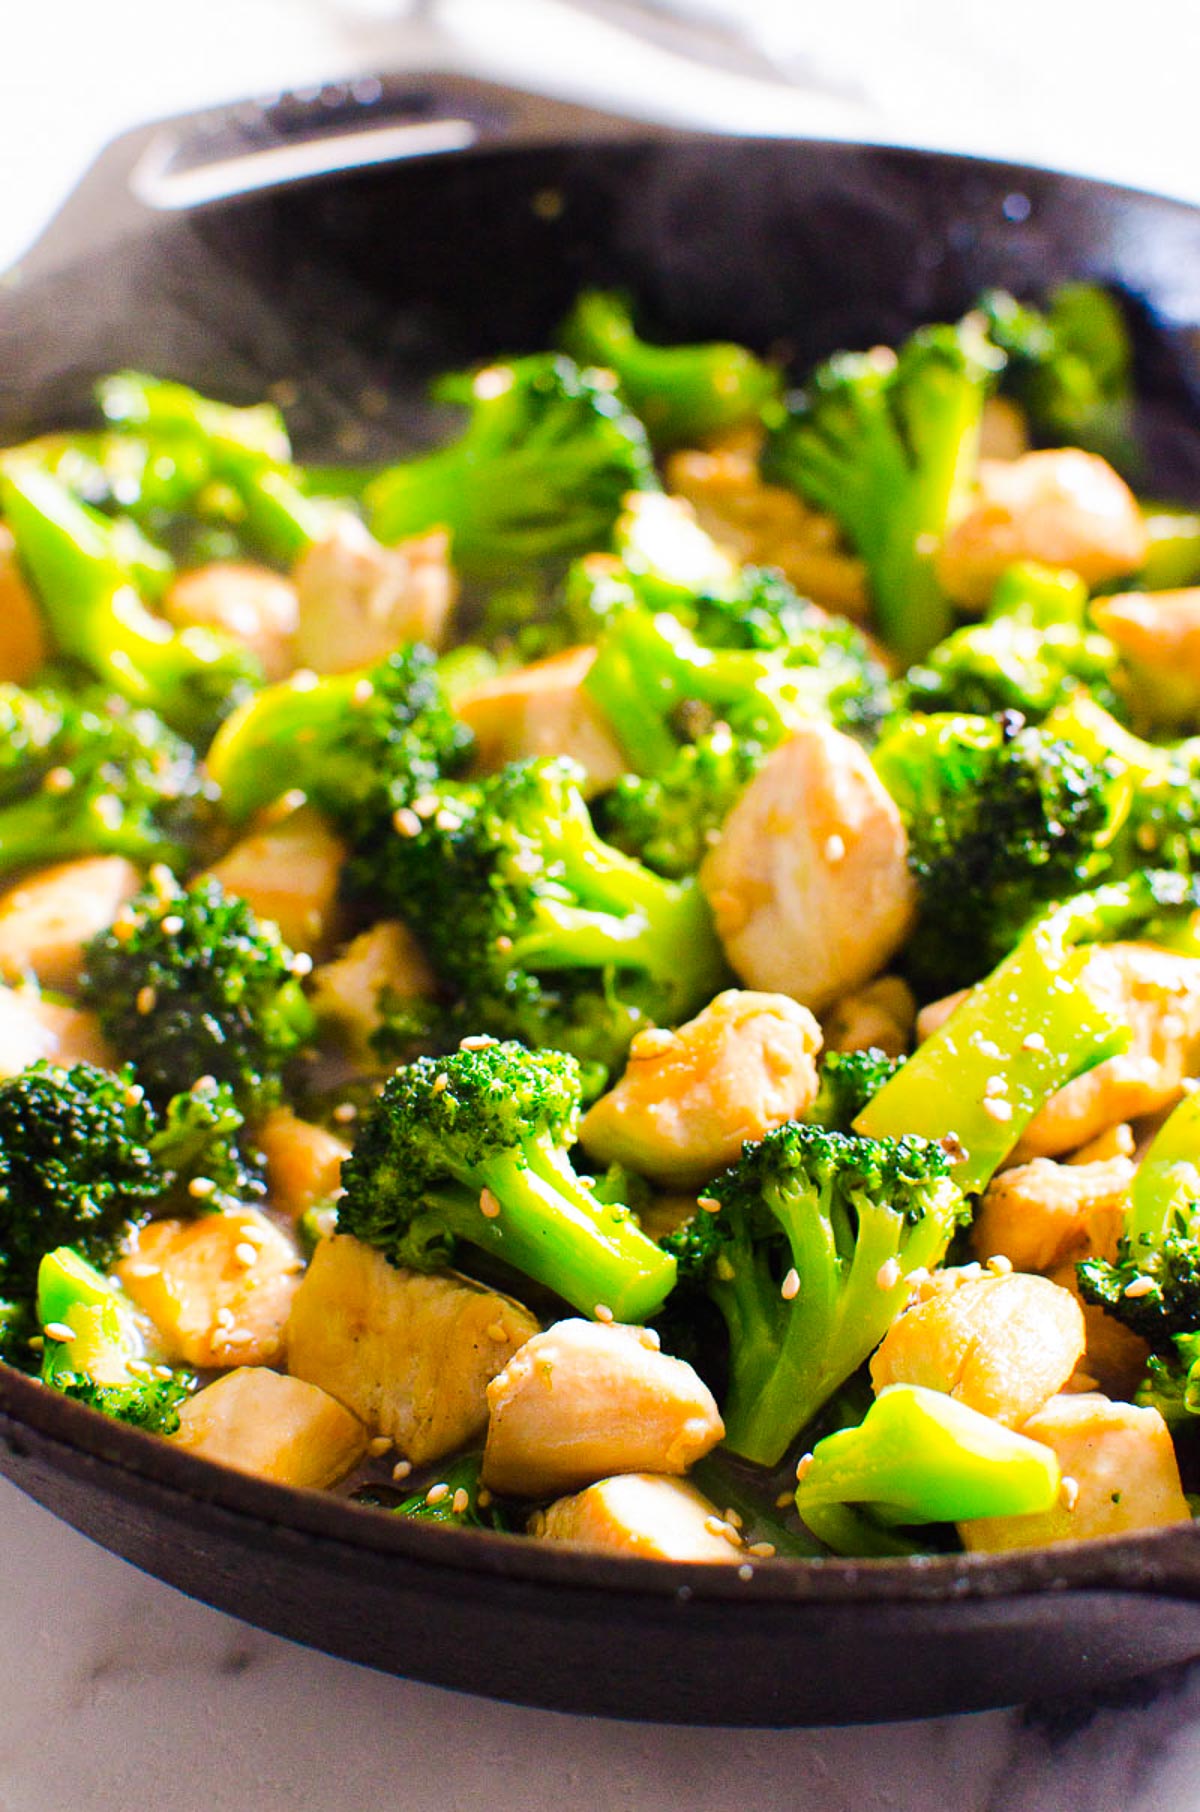 Chinese chicken broccoli stir fry in cast iron skillet.